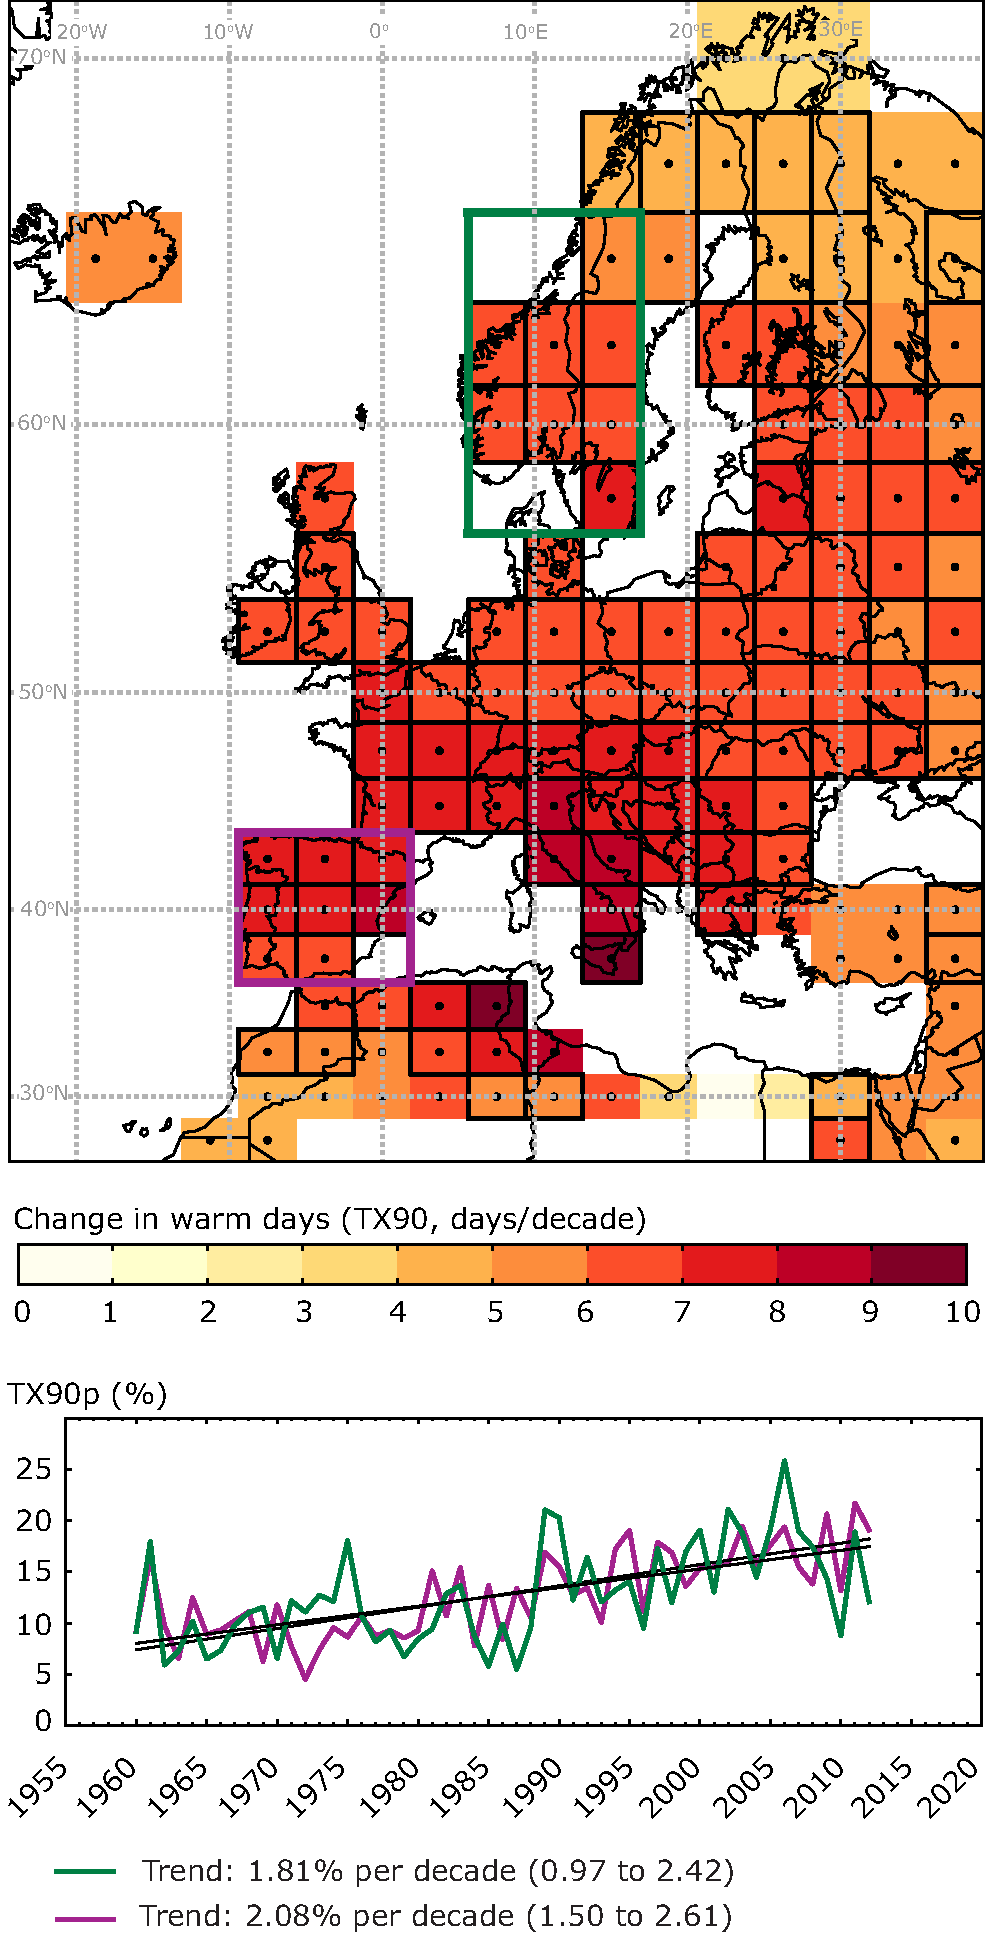 Trends in warm days across Europe 